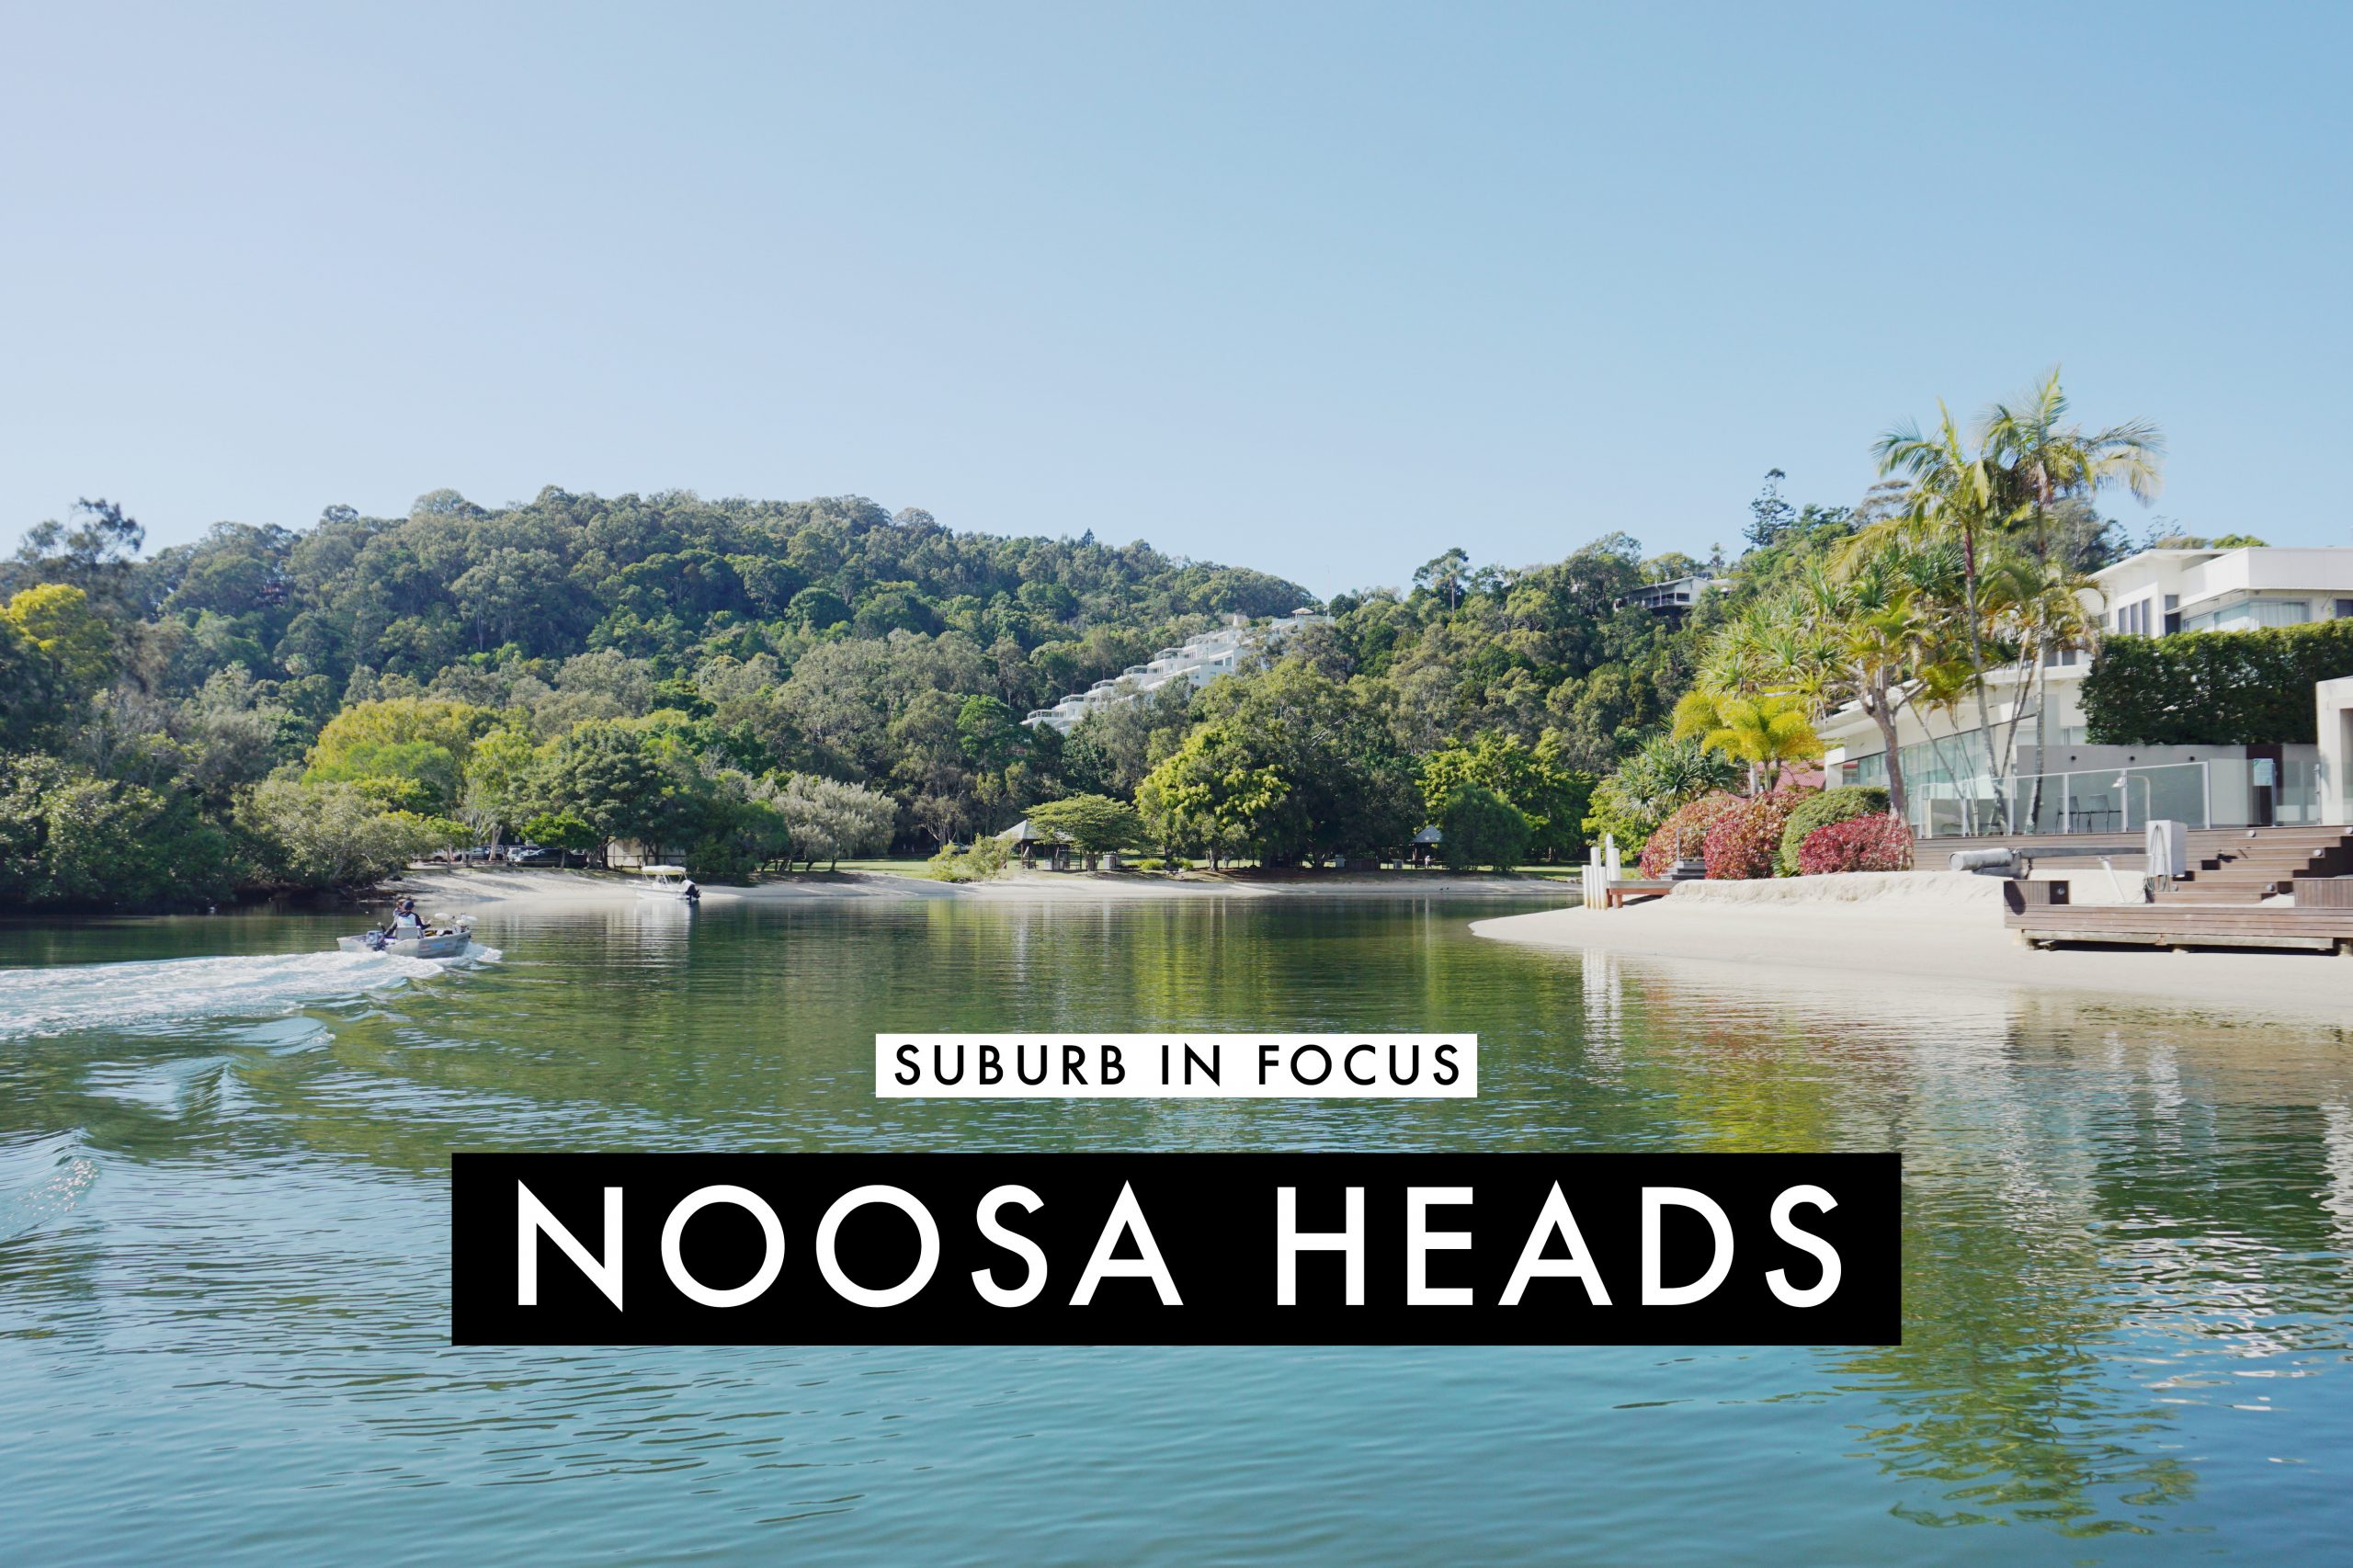 Noosa Heads Property Market | The Property Baron